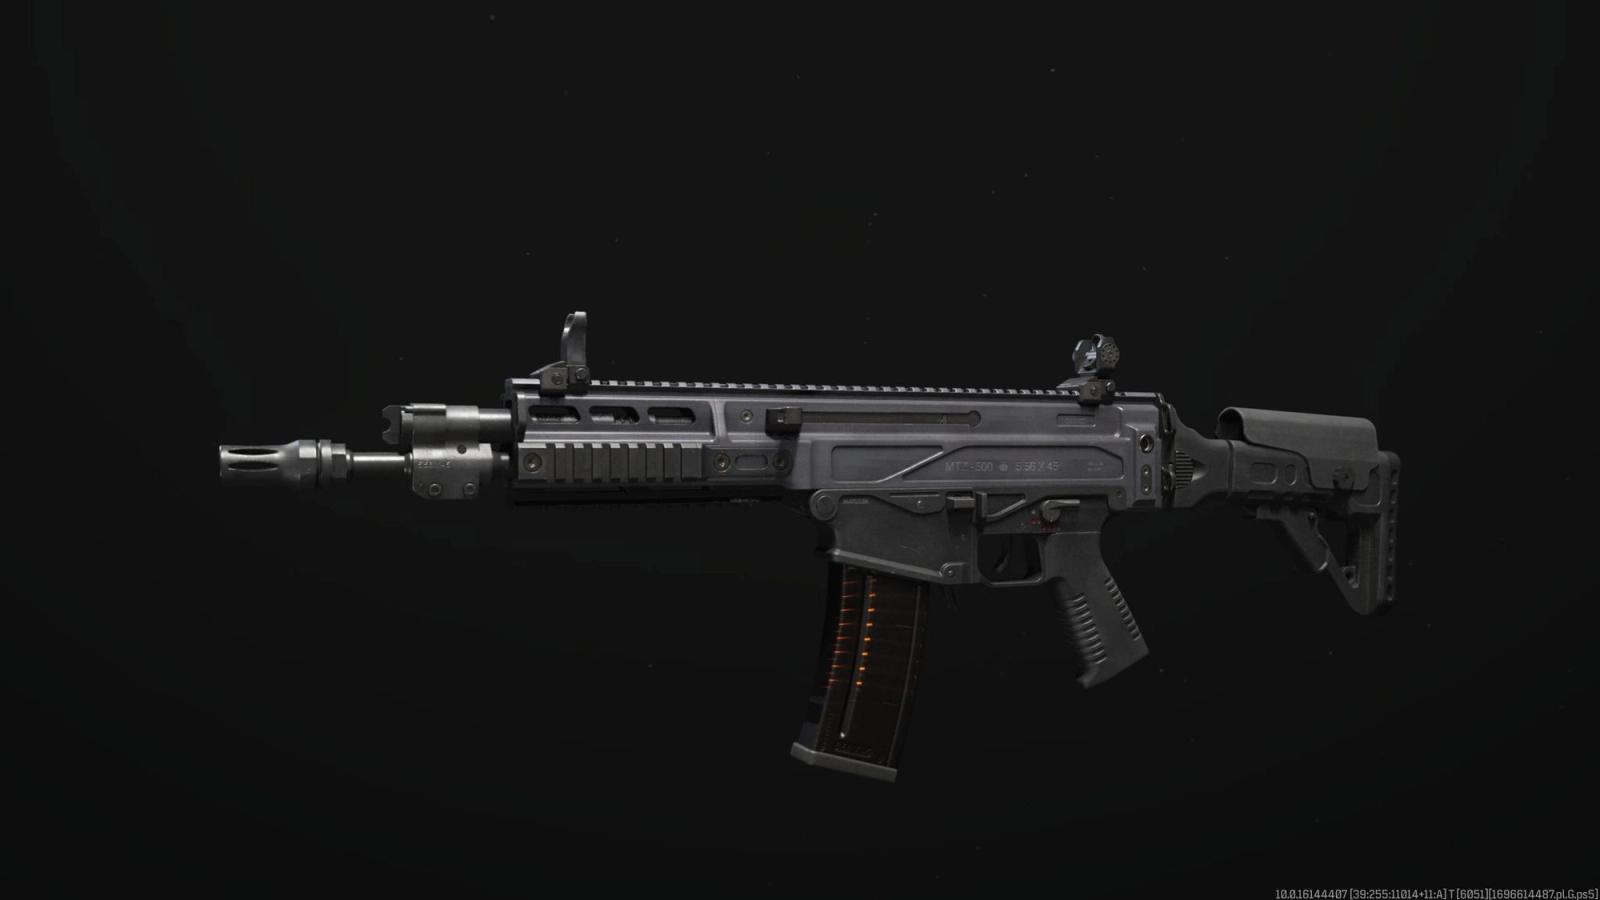 Modern Warfare 3 MTZ 556 assault rifle on black background